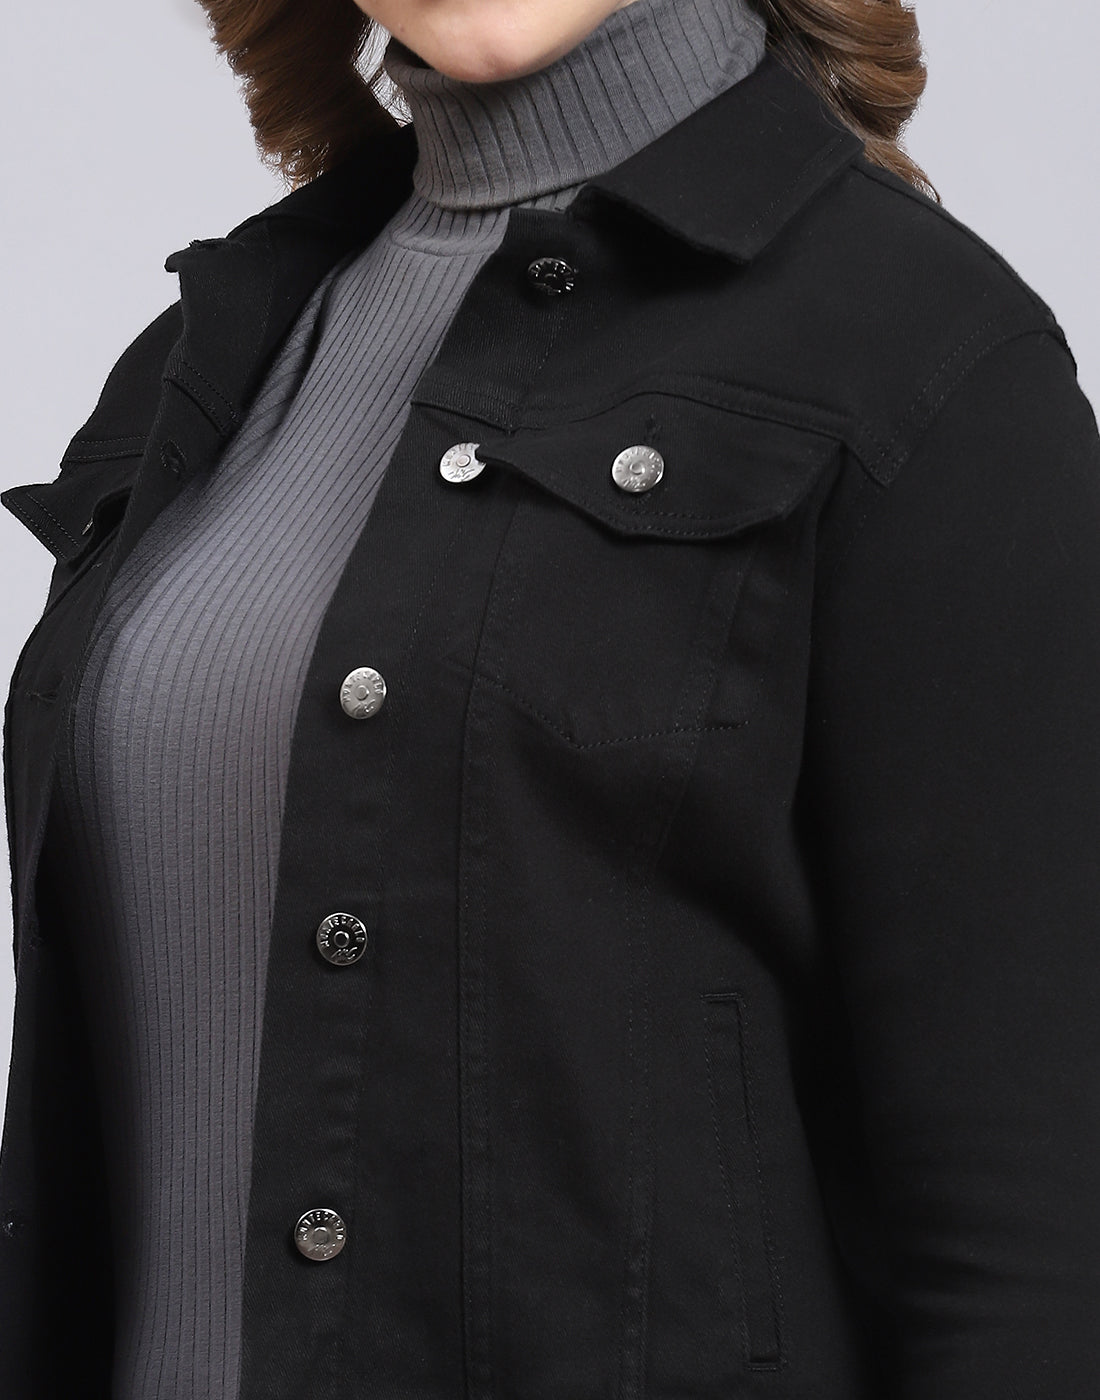 Women Black Solid Collar Full Sleeve Jacket